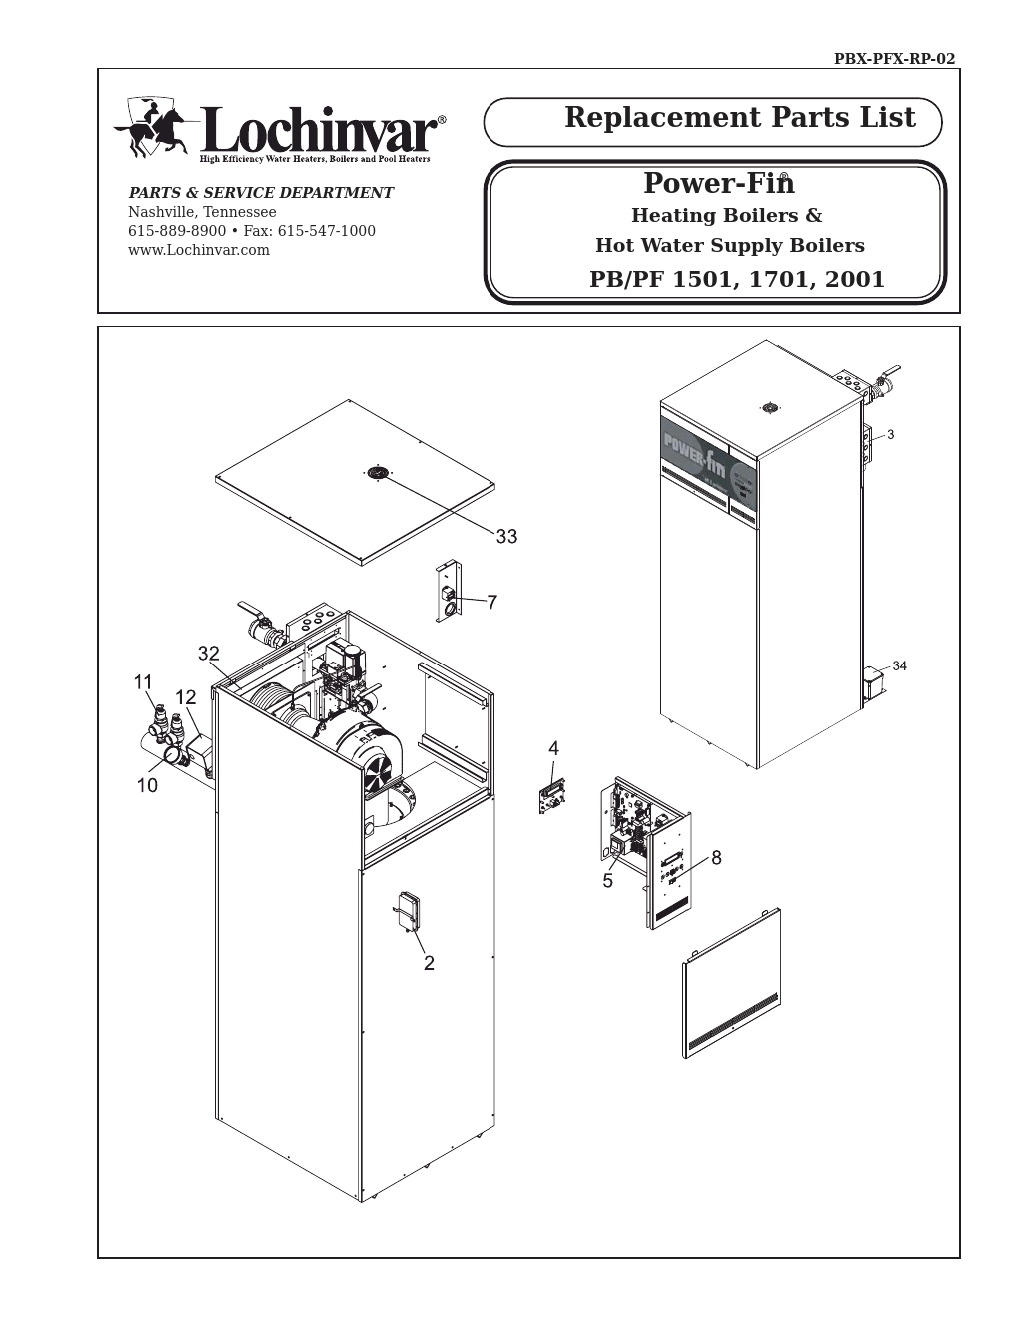 Power-Fin Heating Boilers & Hot Water Supply Boilers 2001